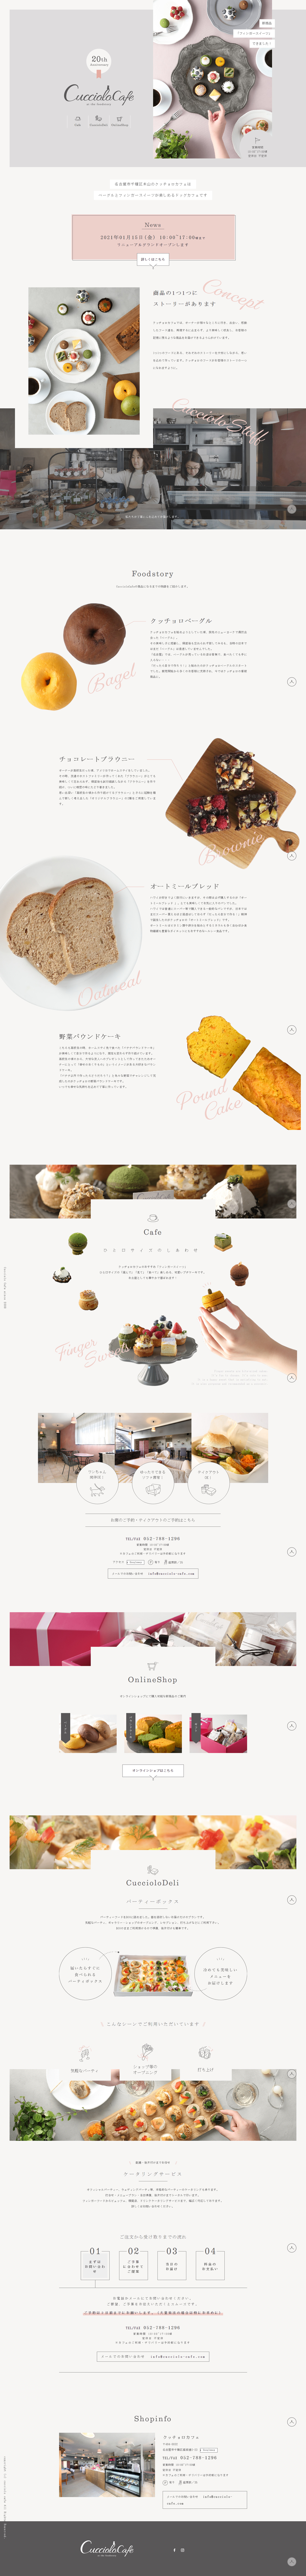 cucciolo咖啡店网页设计